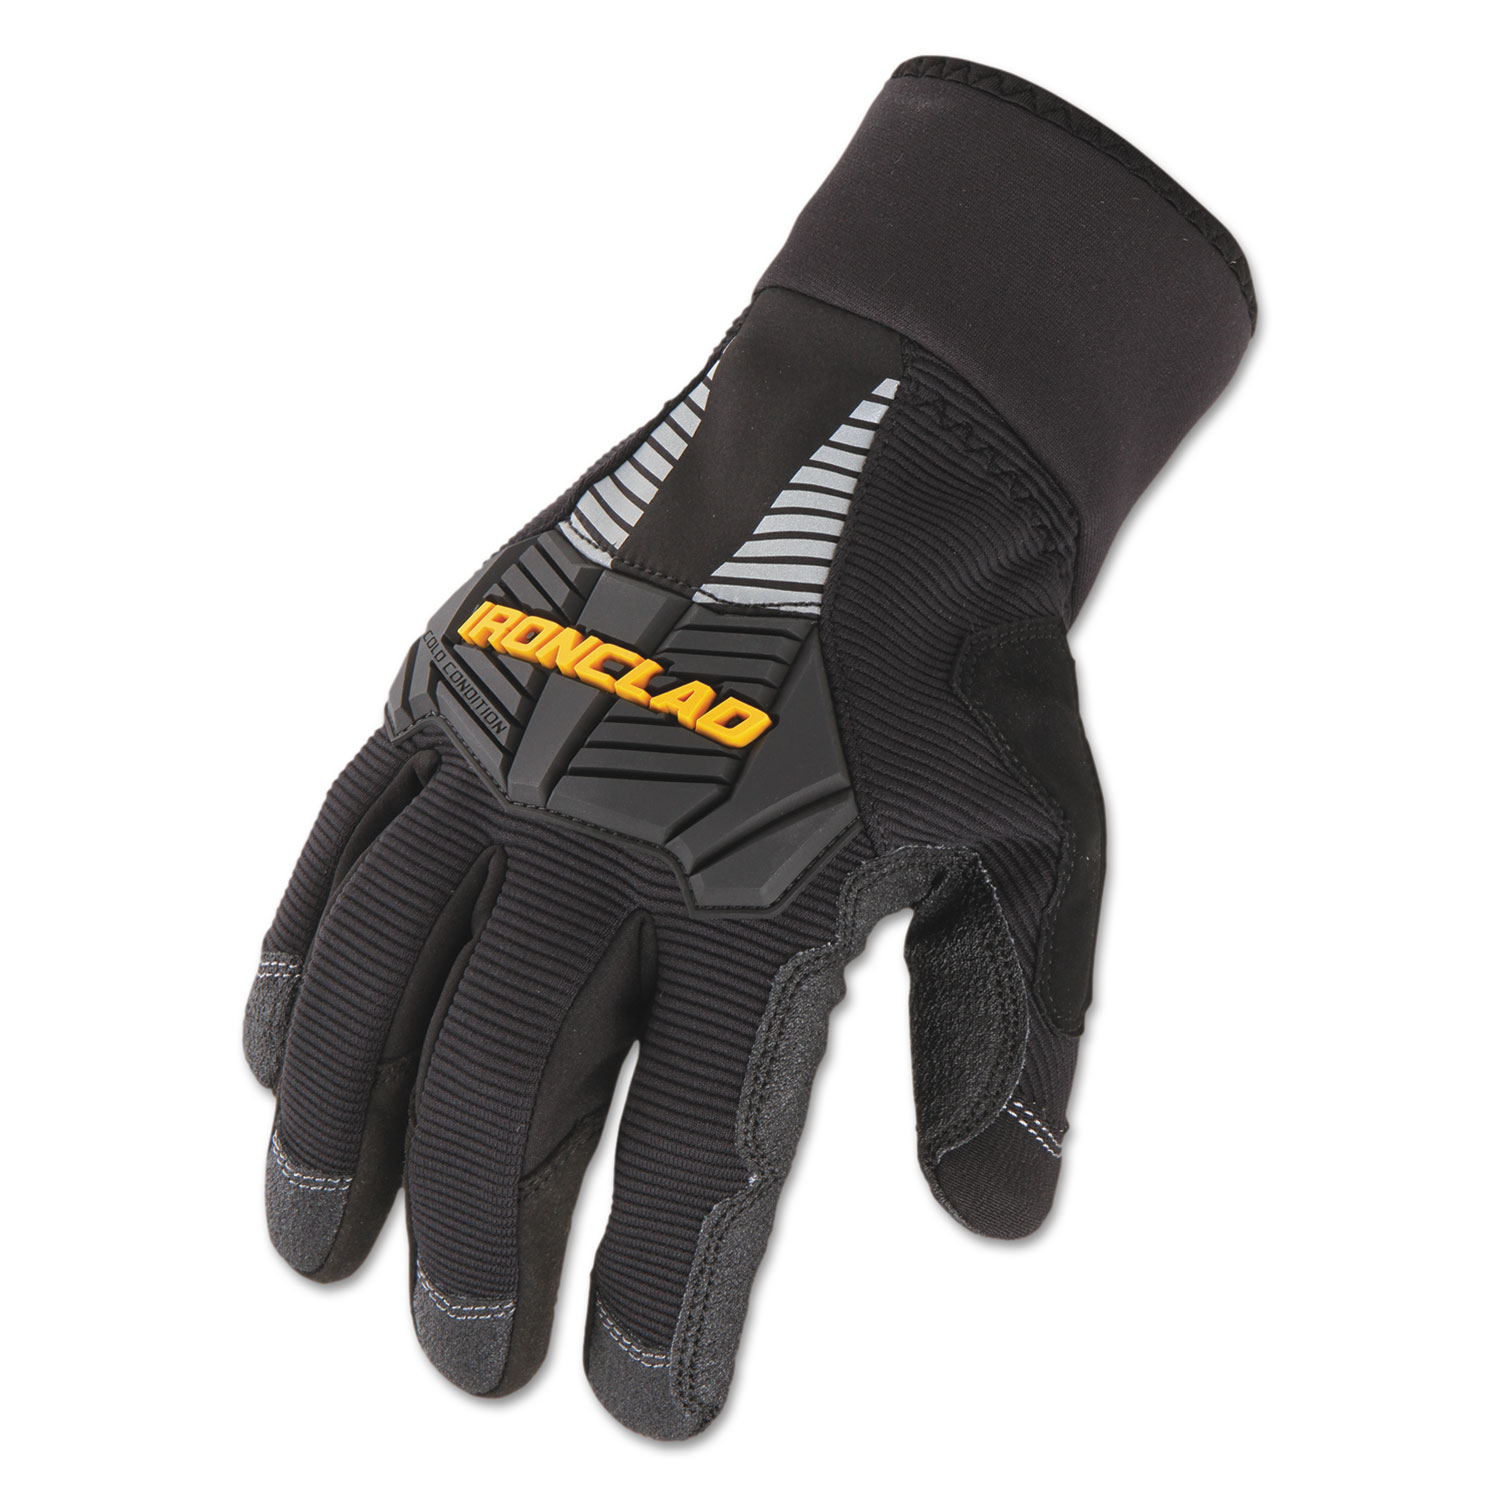 Cold Condition Gloves, Black, Medium